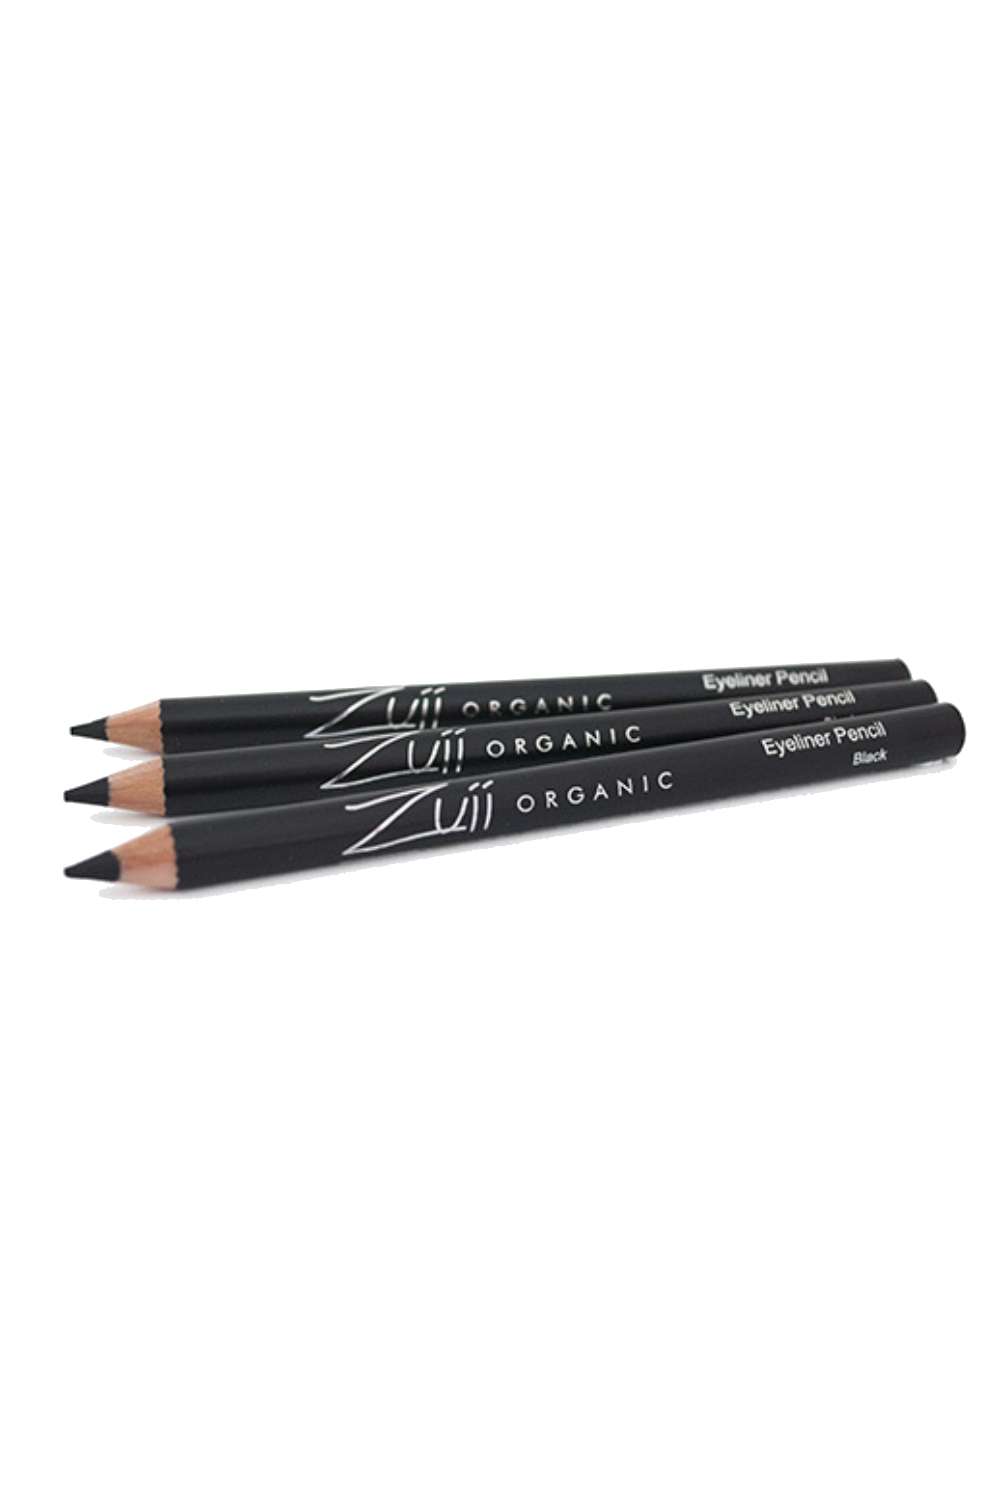 Zuii Organic Certified Eyeliner Pencil -Black